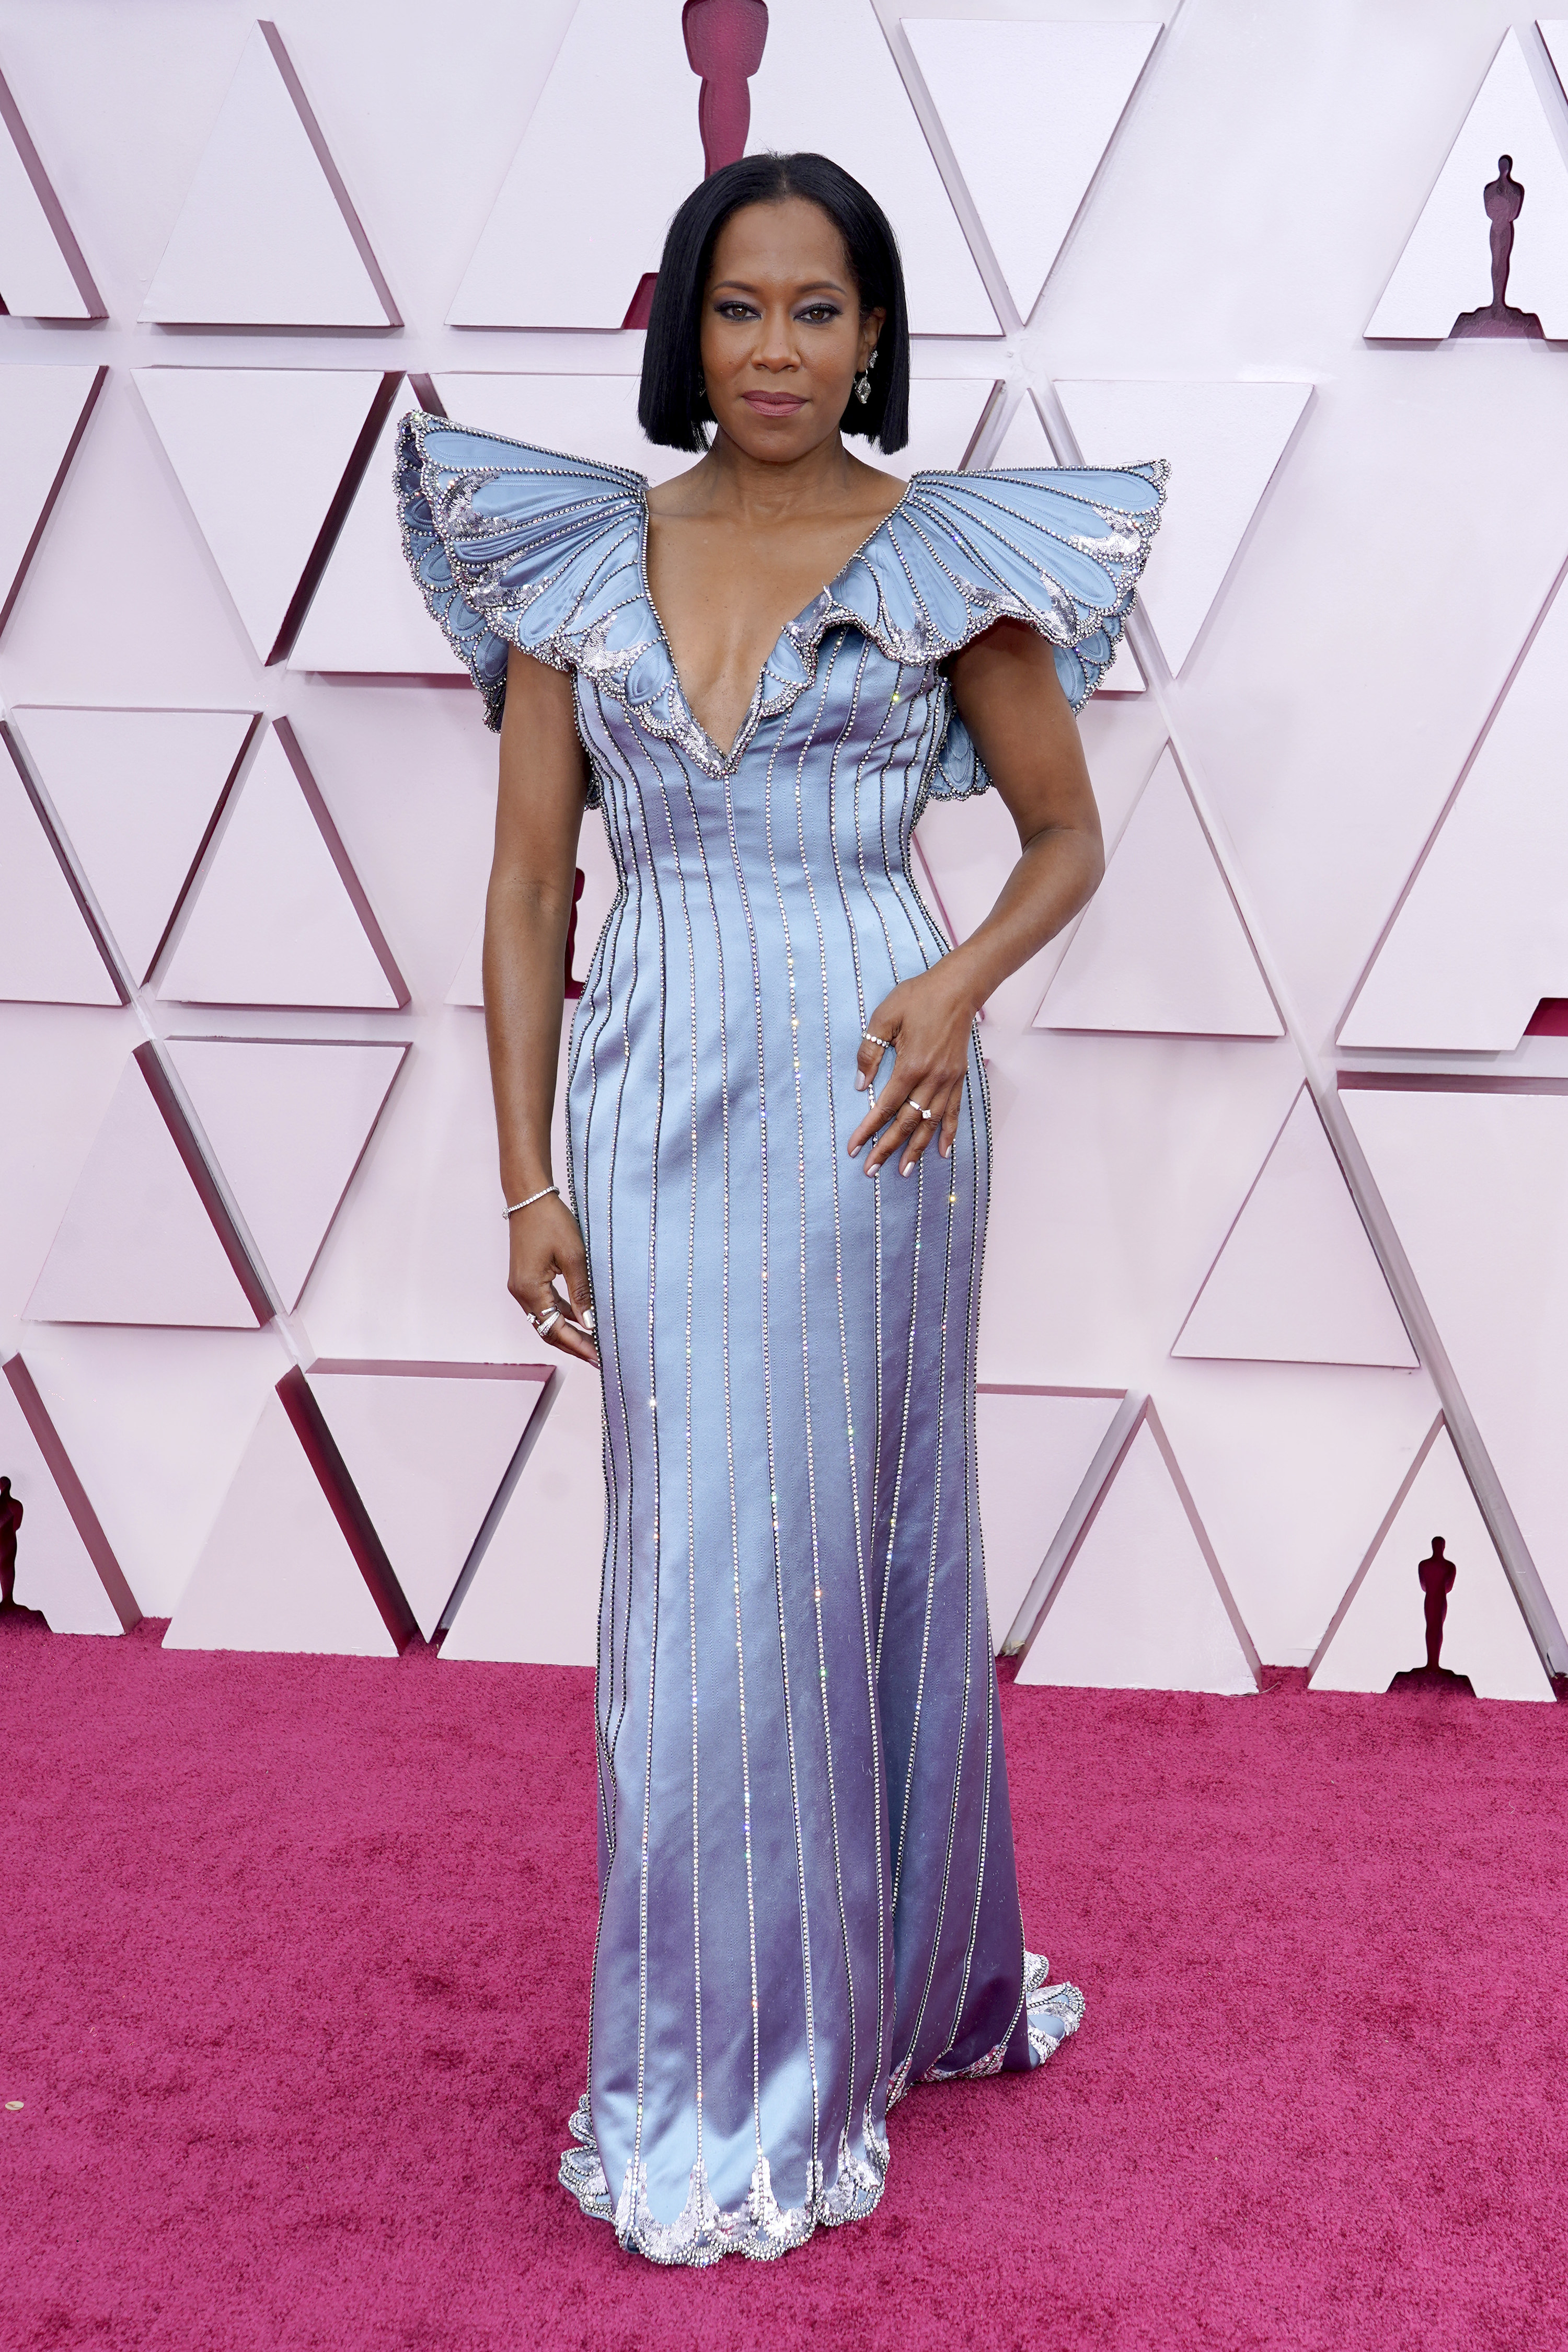 Regina King at the 2021 Oscars red carpet